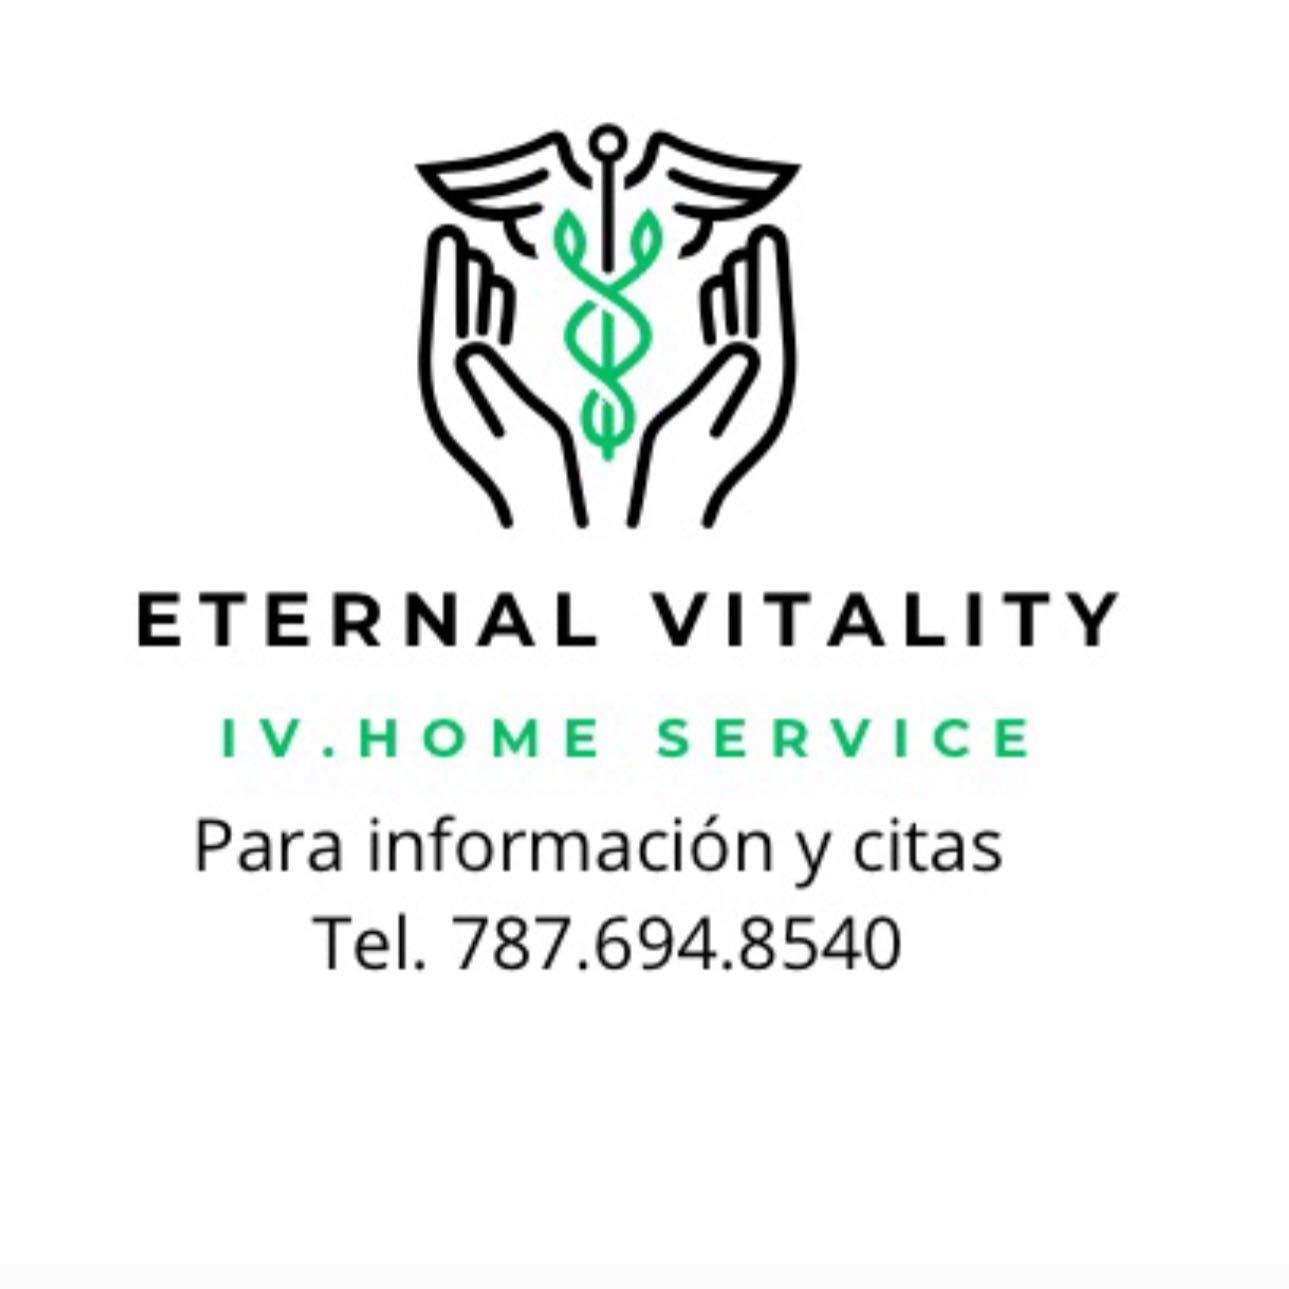 Eternal Vitality(IV TERAPHY), 18-14 Calle Oviedo, Pueblo viejo, A domicilio, Guaynabo, 00969